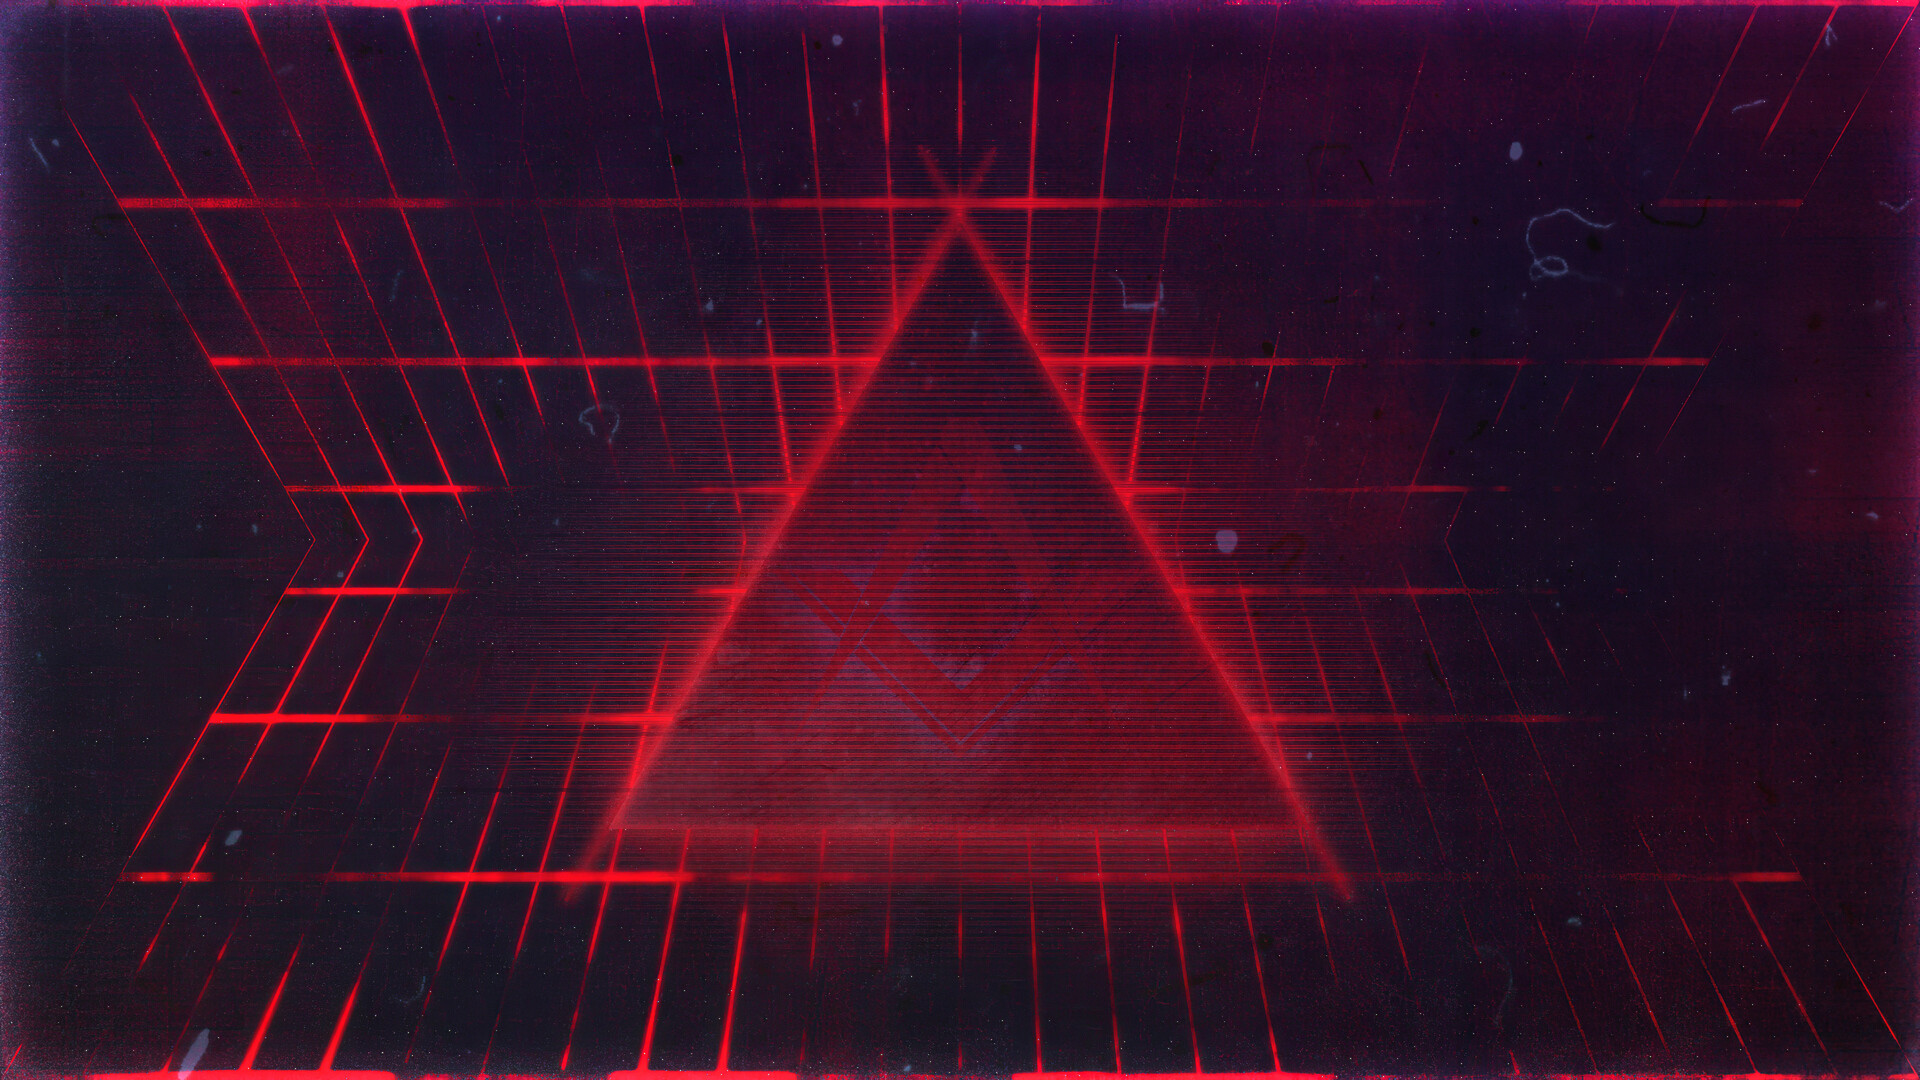 Triangle: Geometry art, Red line segments, Grid, Parallel lines. 1920x1080 Full HD Wallpaper.